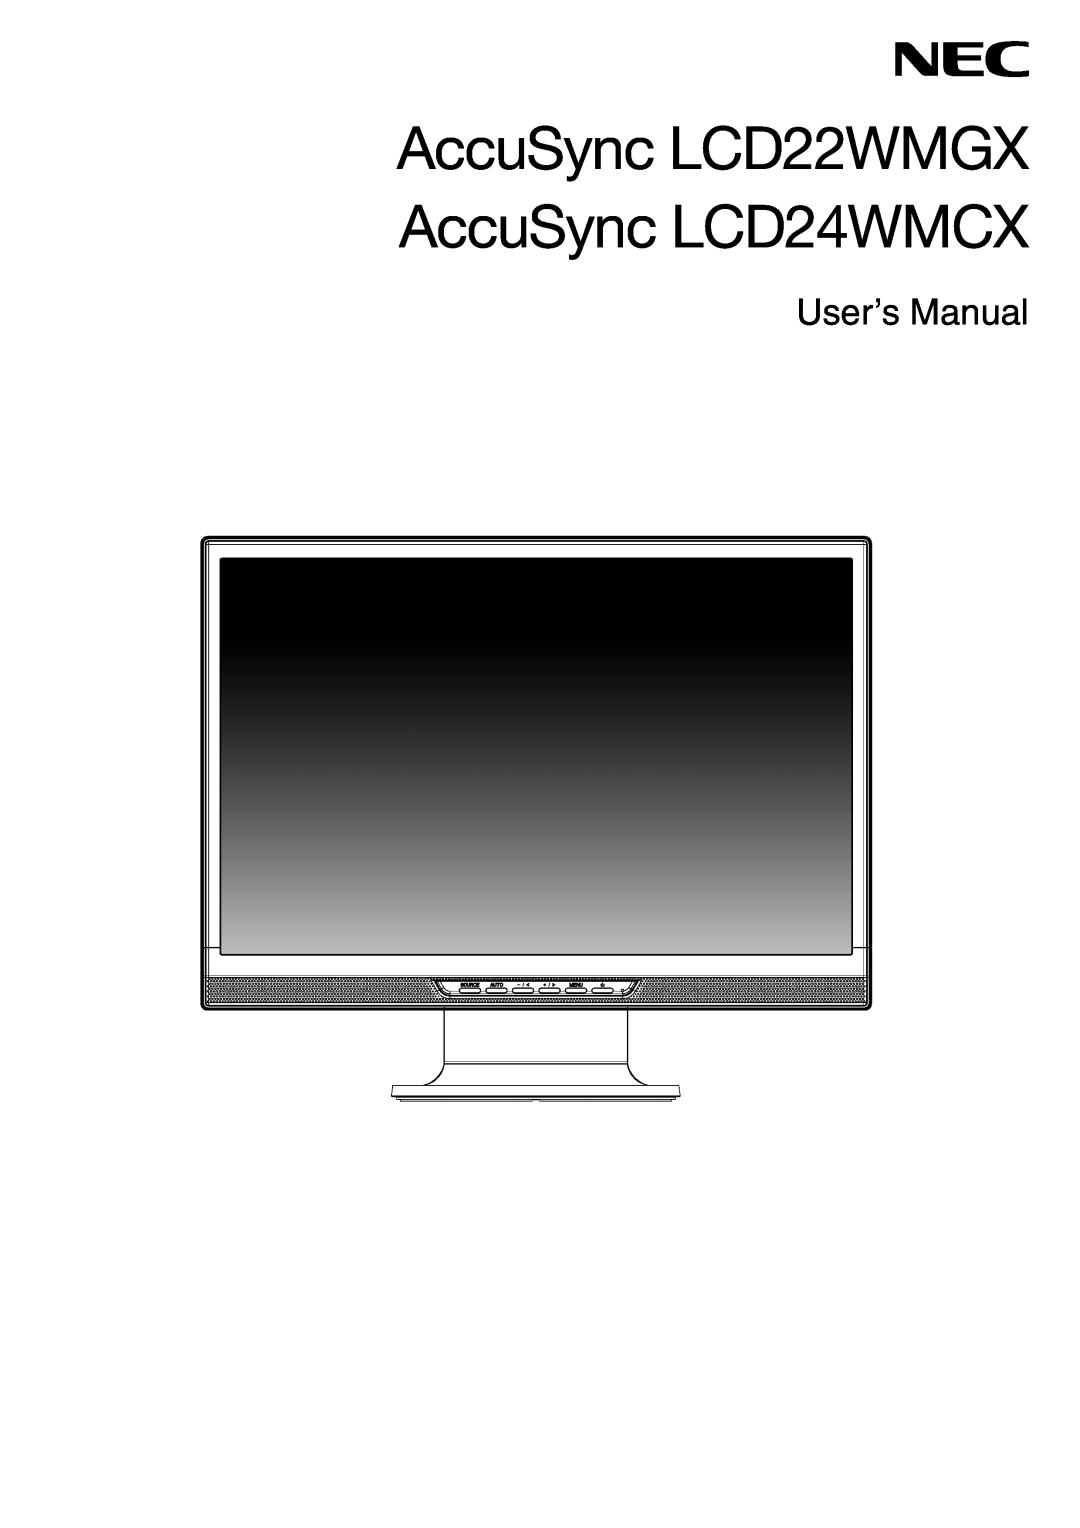 NEC user manual AccuSync LCD22WMGX, AccuSync LCD24WMCX, UserÕs Manual 